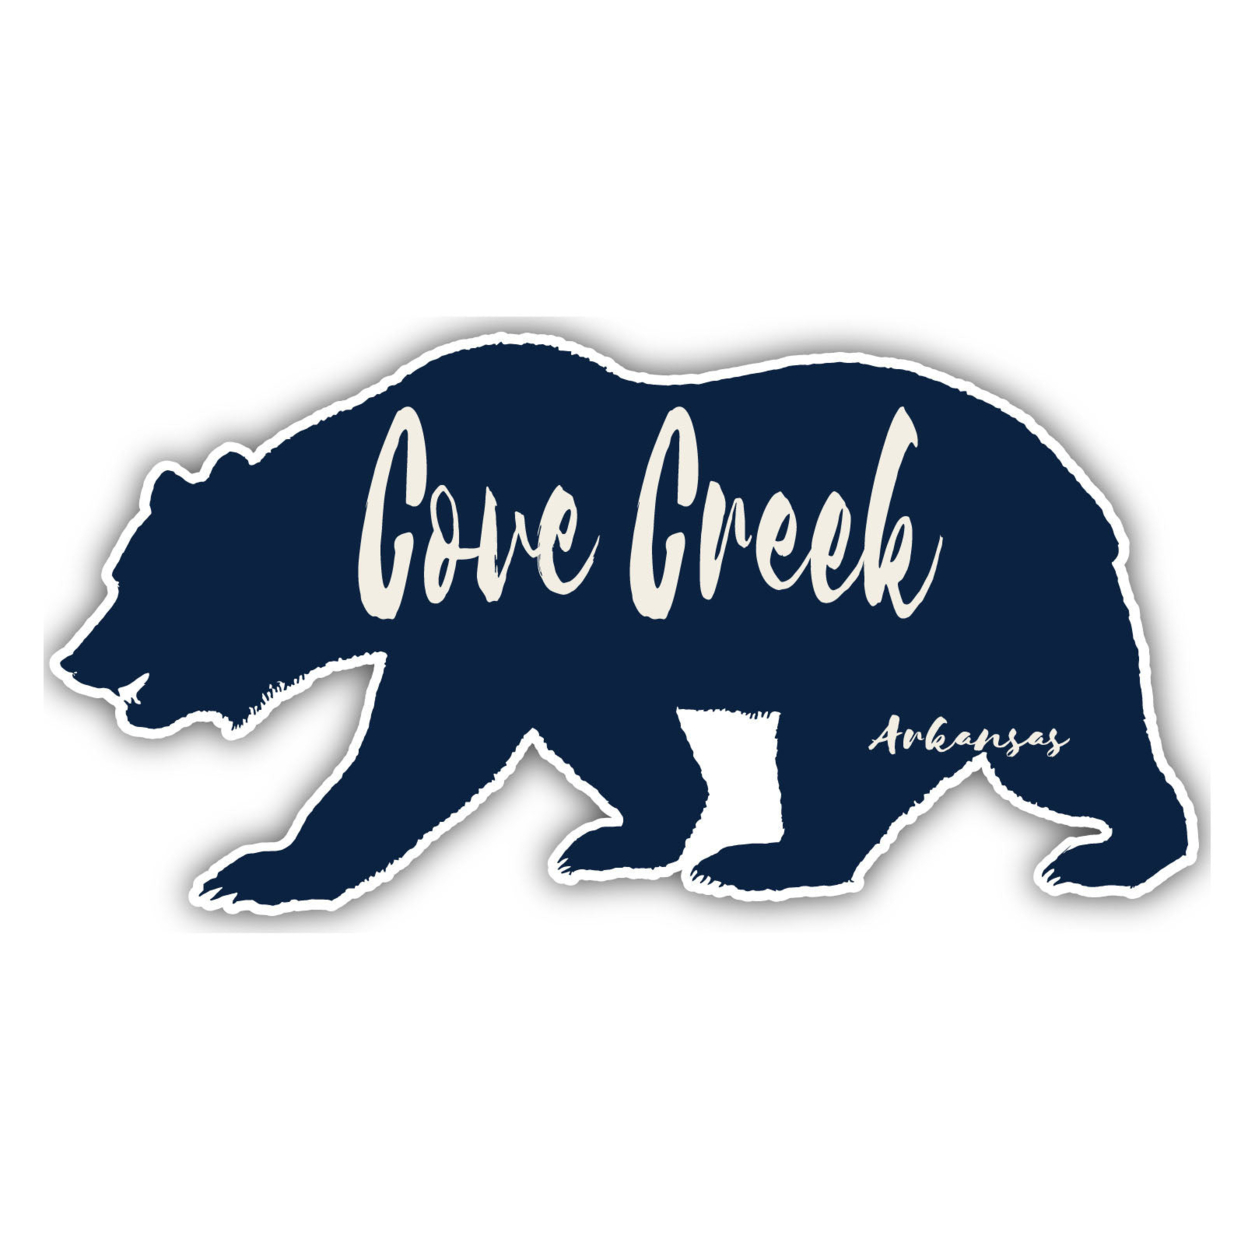 Cove Creek Arkansas Souvenir Decorative Stickers (Choose Theme And Size) - Single Unit, 4-Inch, Bear